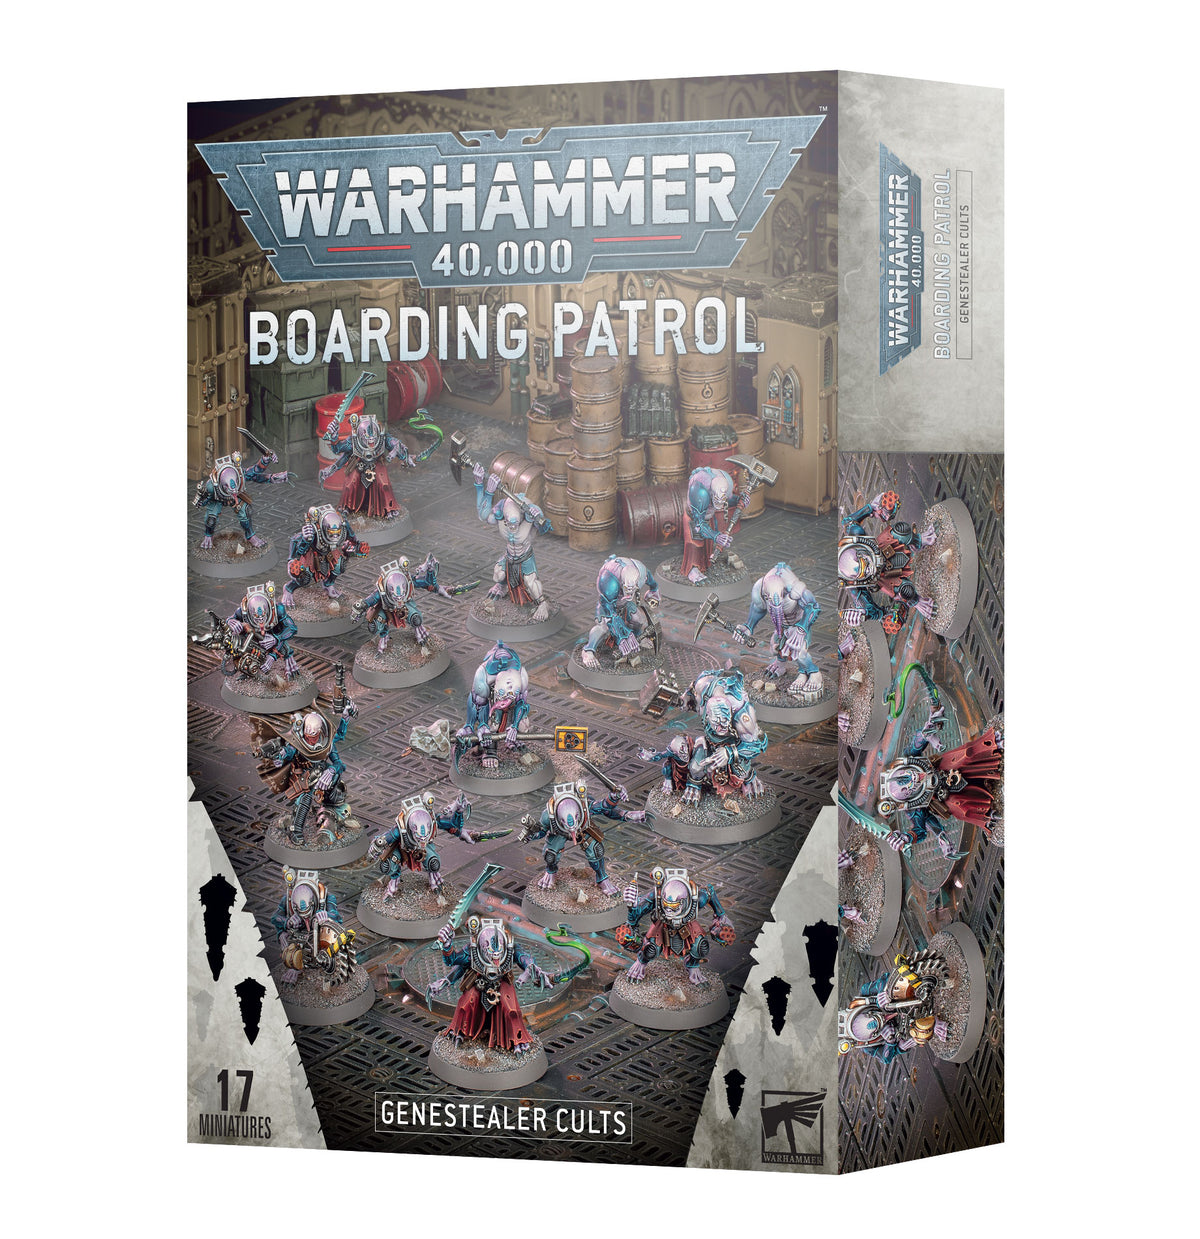 Boarding Patrol - Genestealer Cults (Warhammer 40,000)